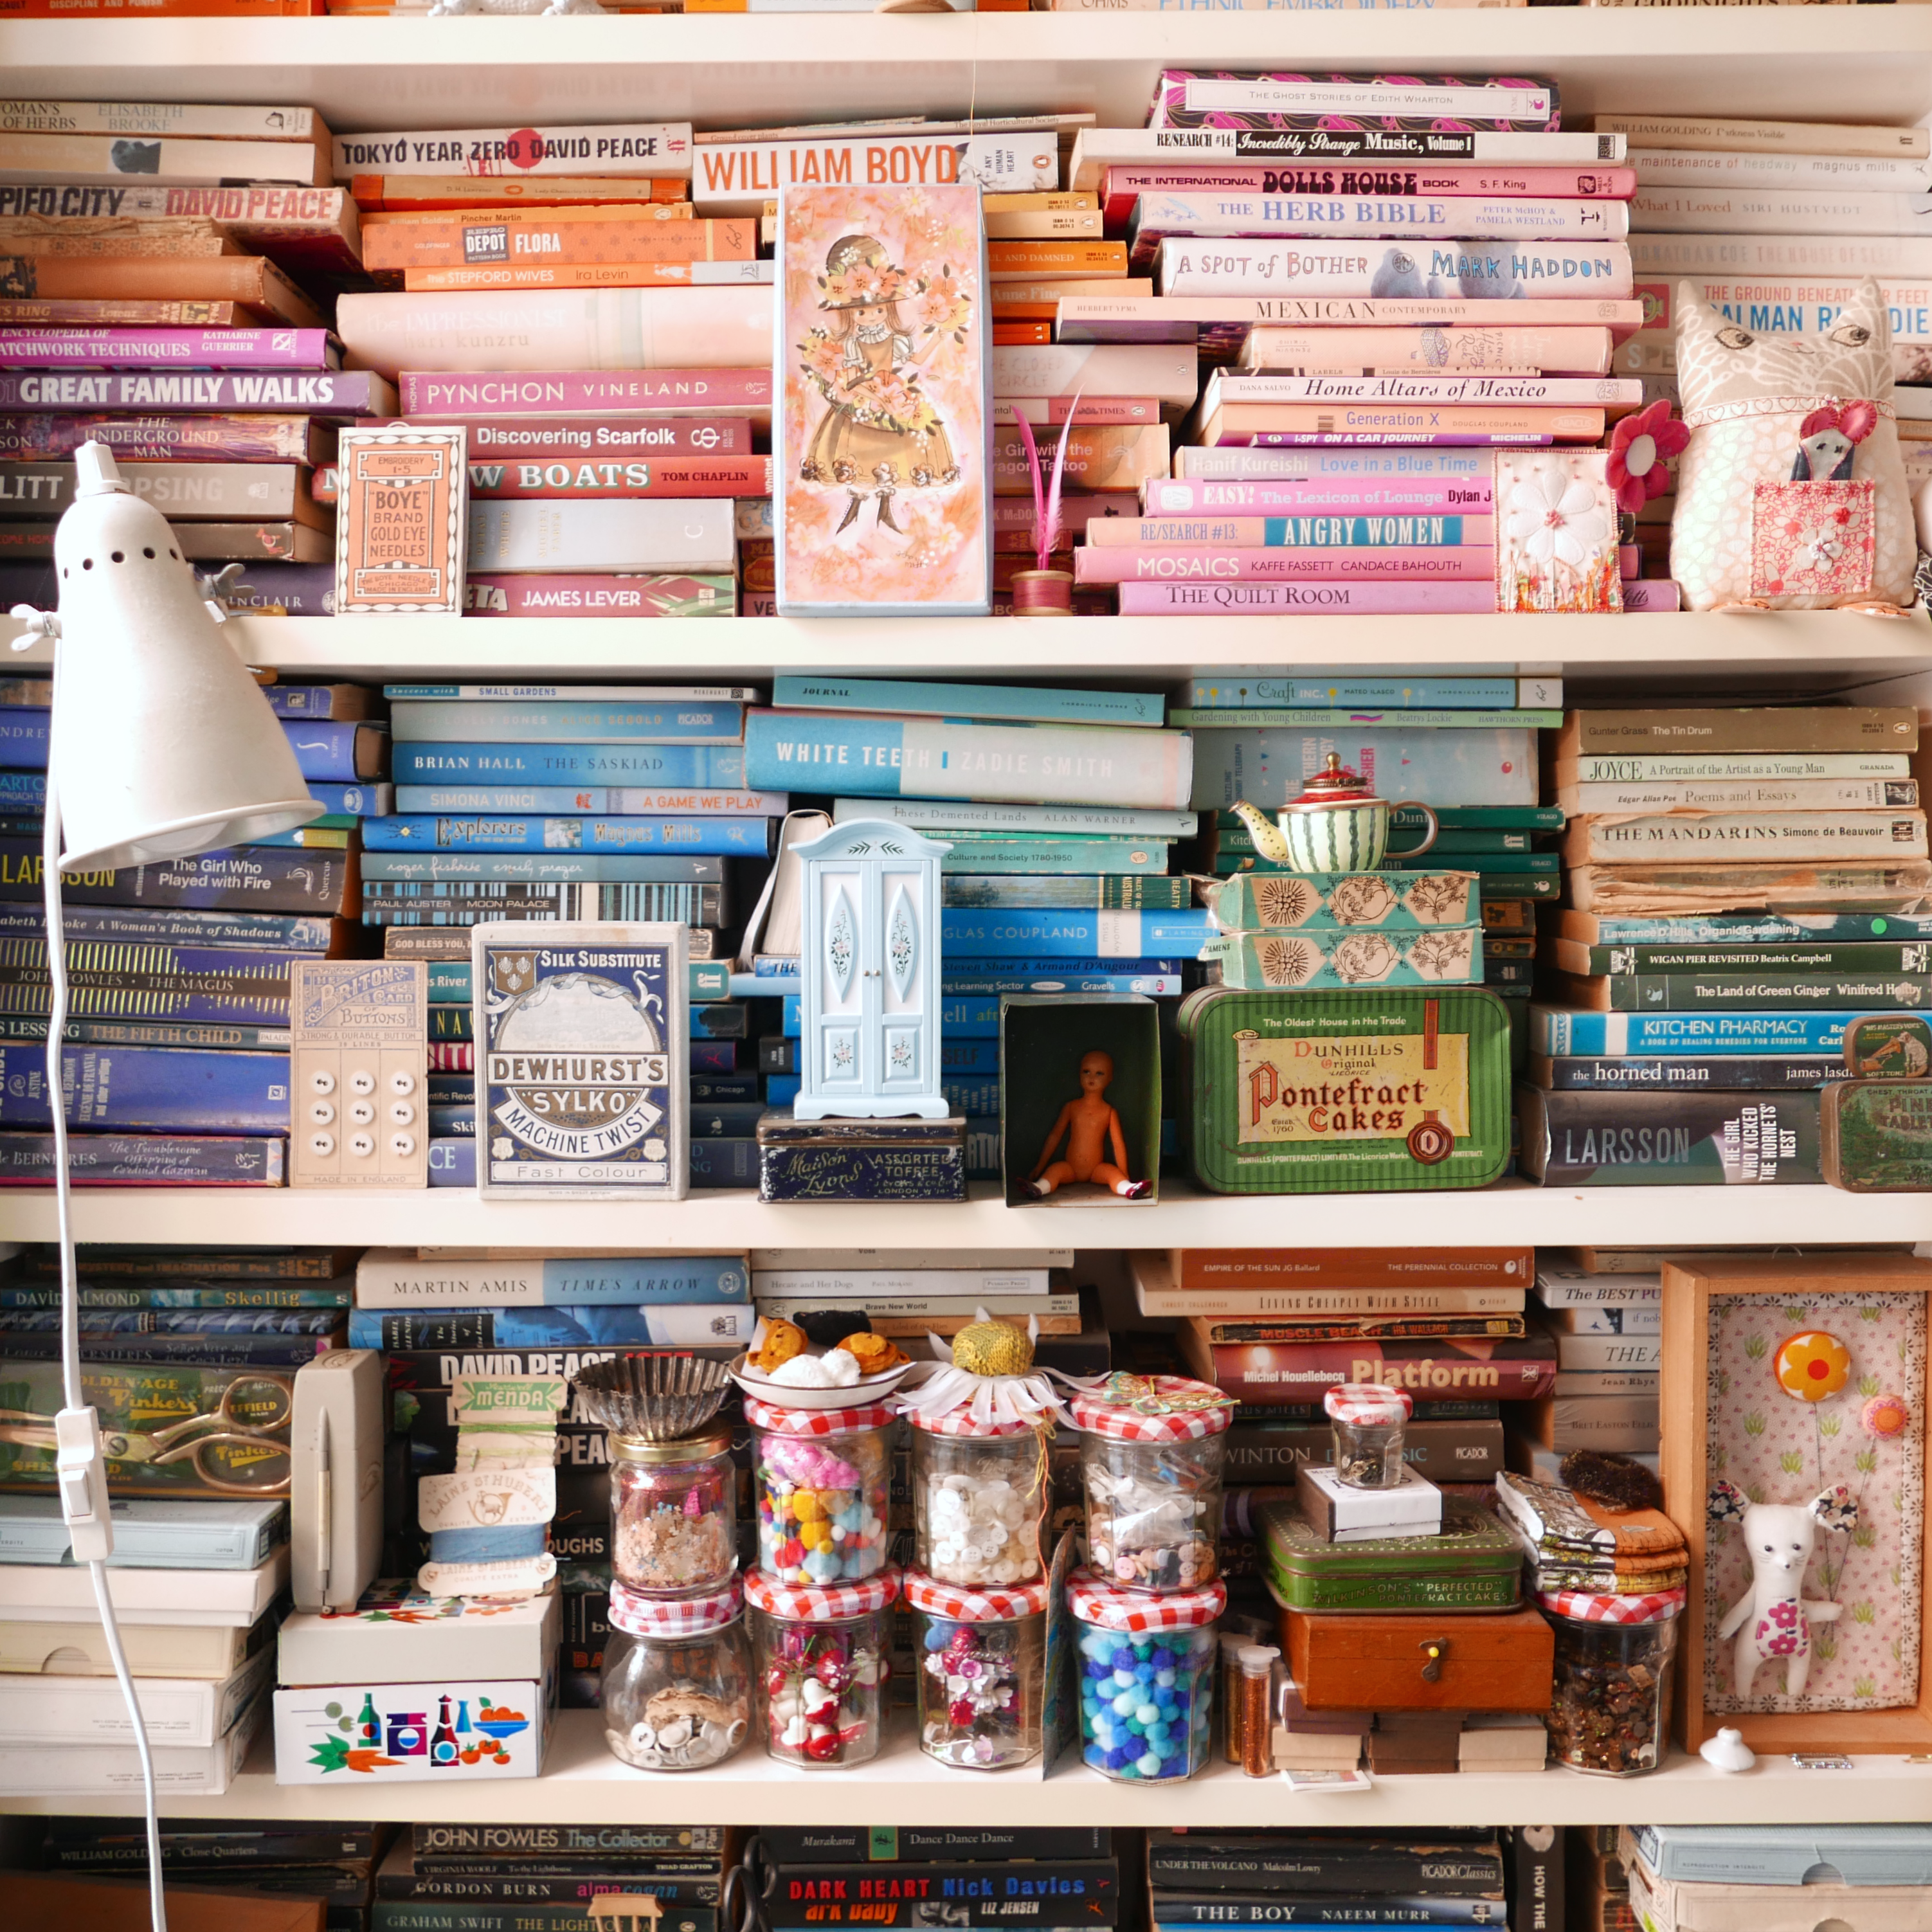 The shelves of Sharon Everest of modflowers home studio